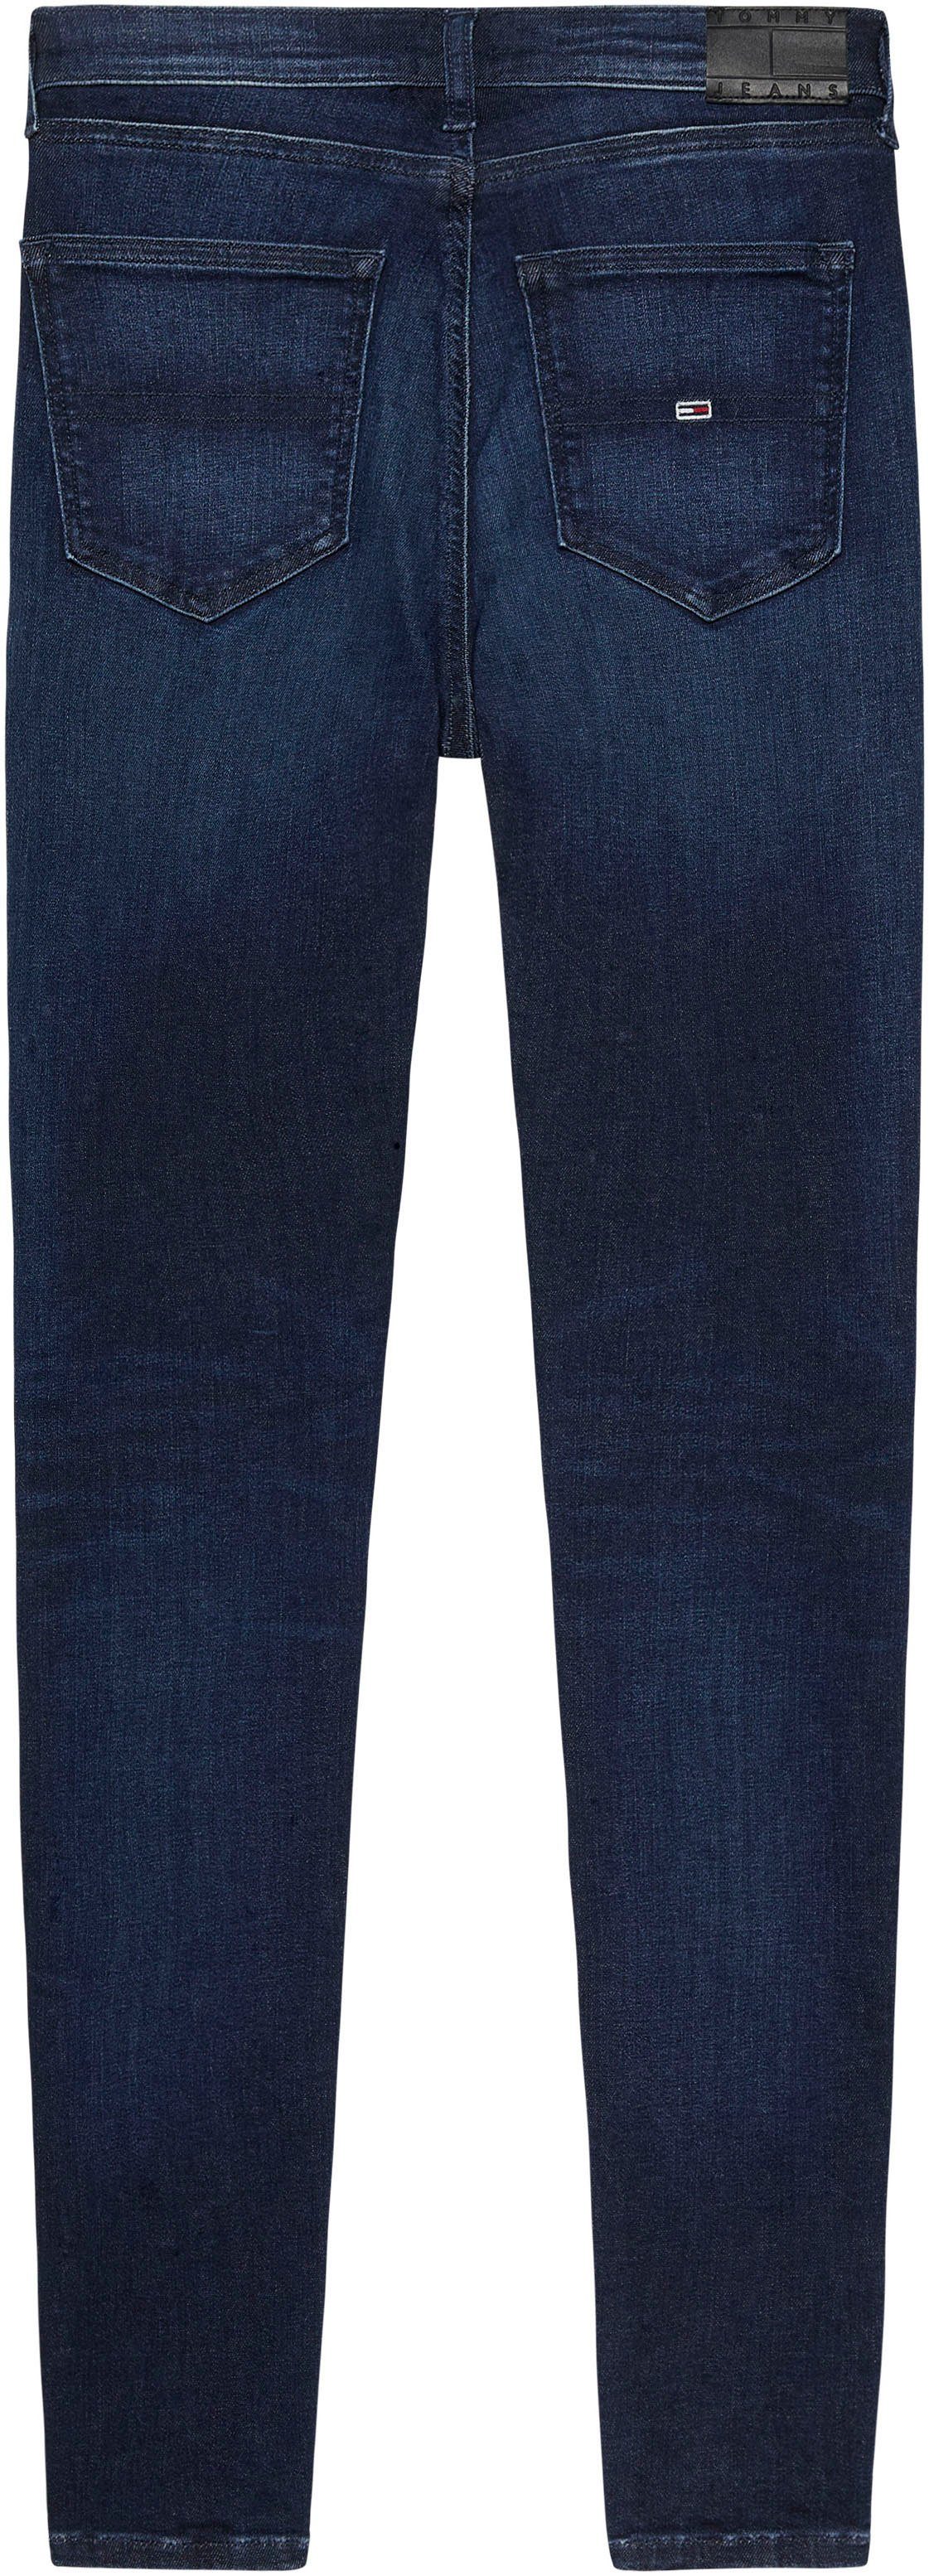 Jeans Tommy Sylvia Bequeme Dark1 Ledermarkenlabel Denim mit Jeans